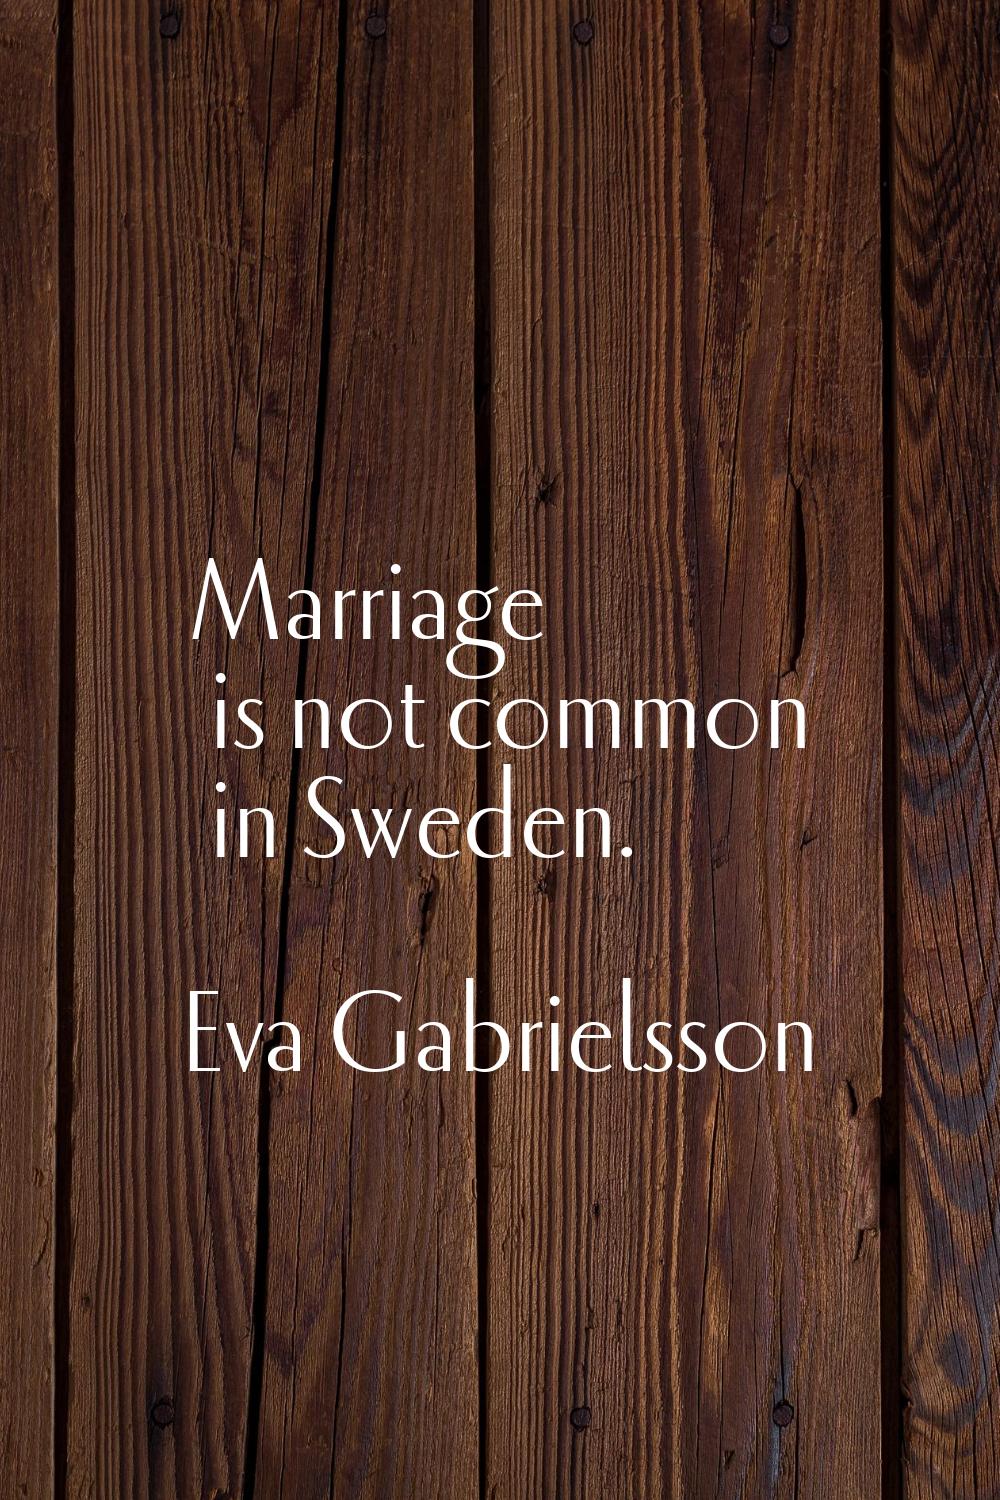 Marriage is not common in Sweden.